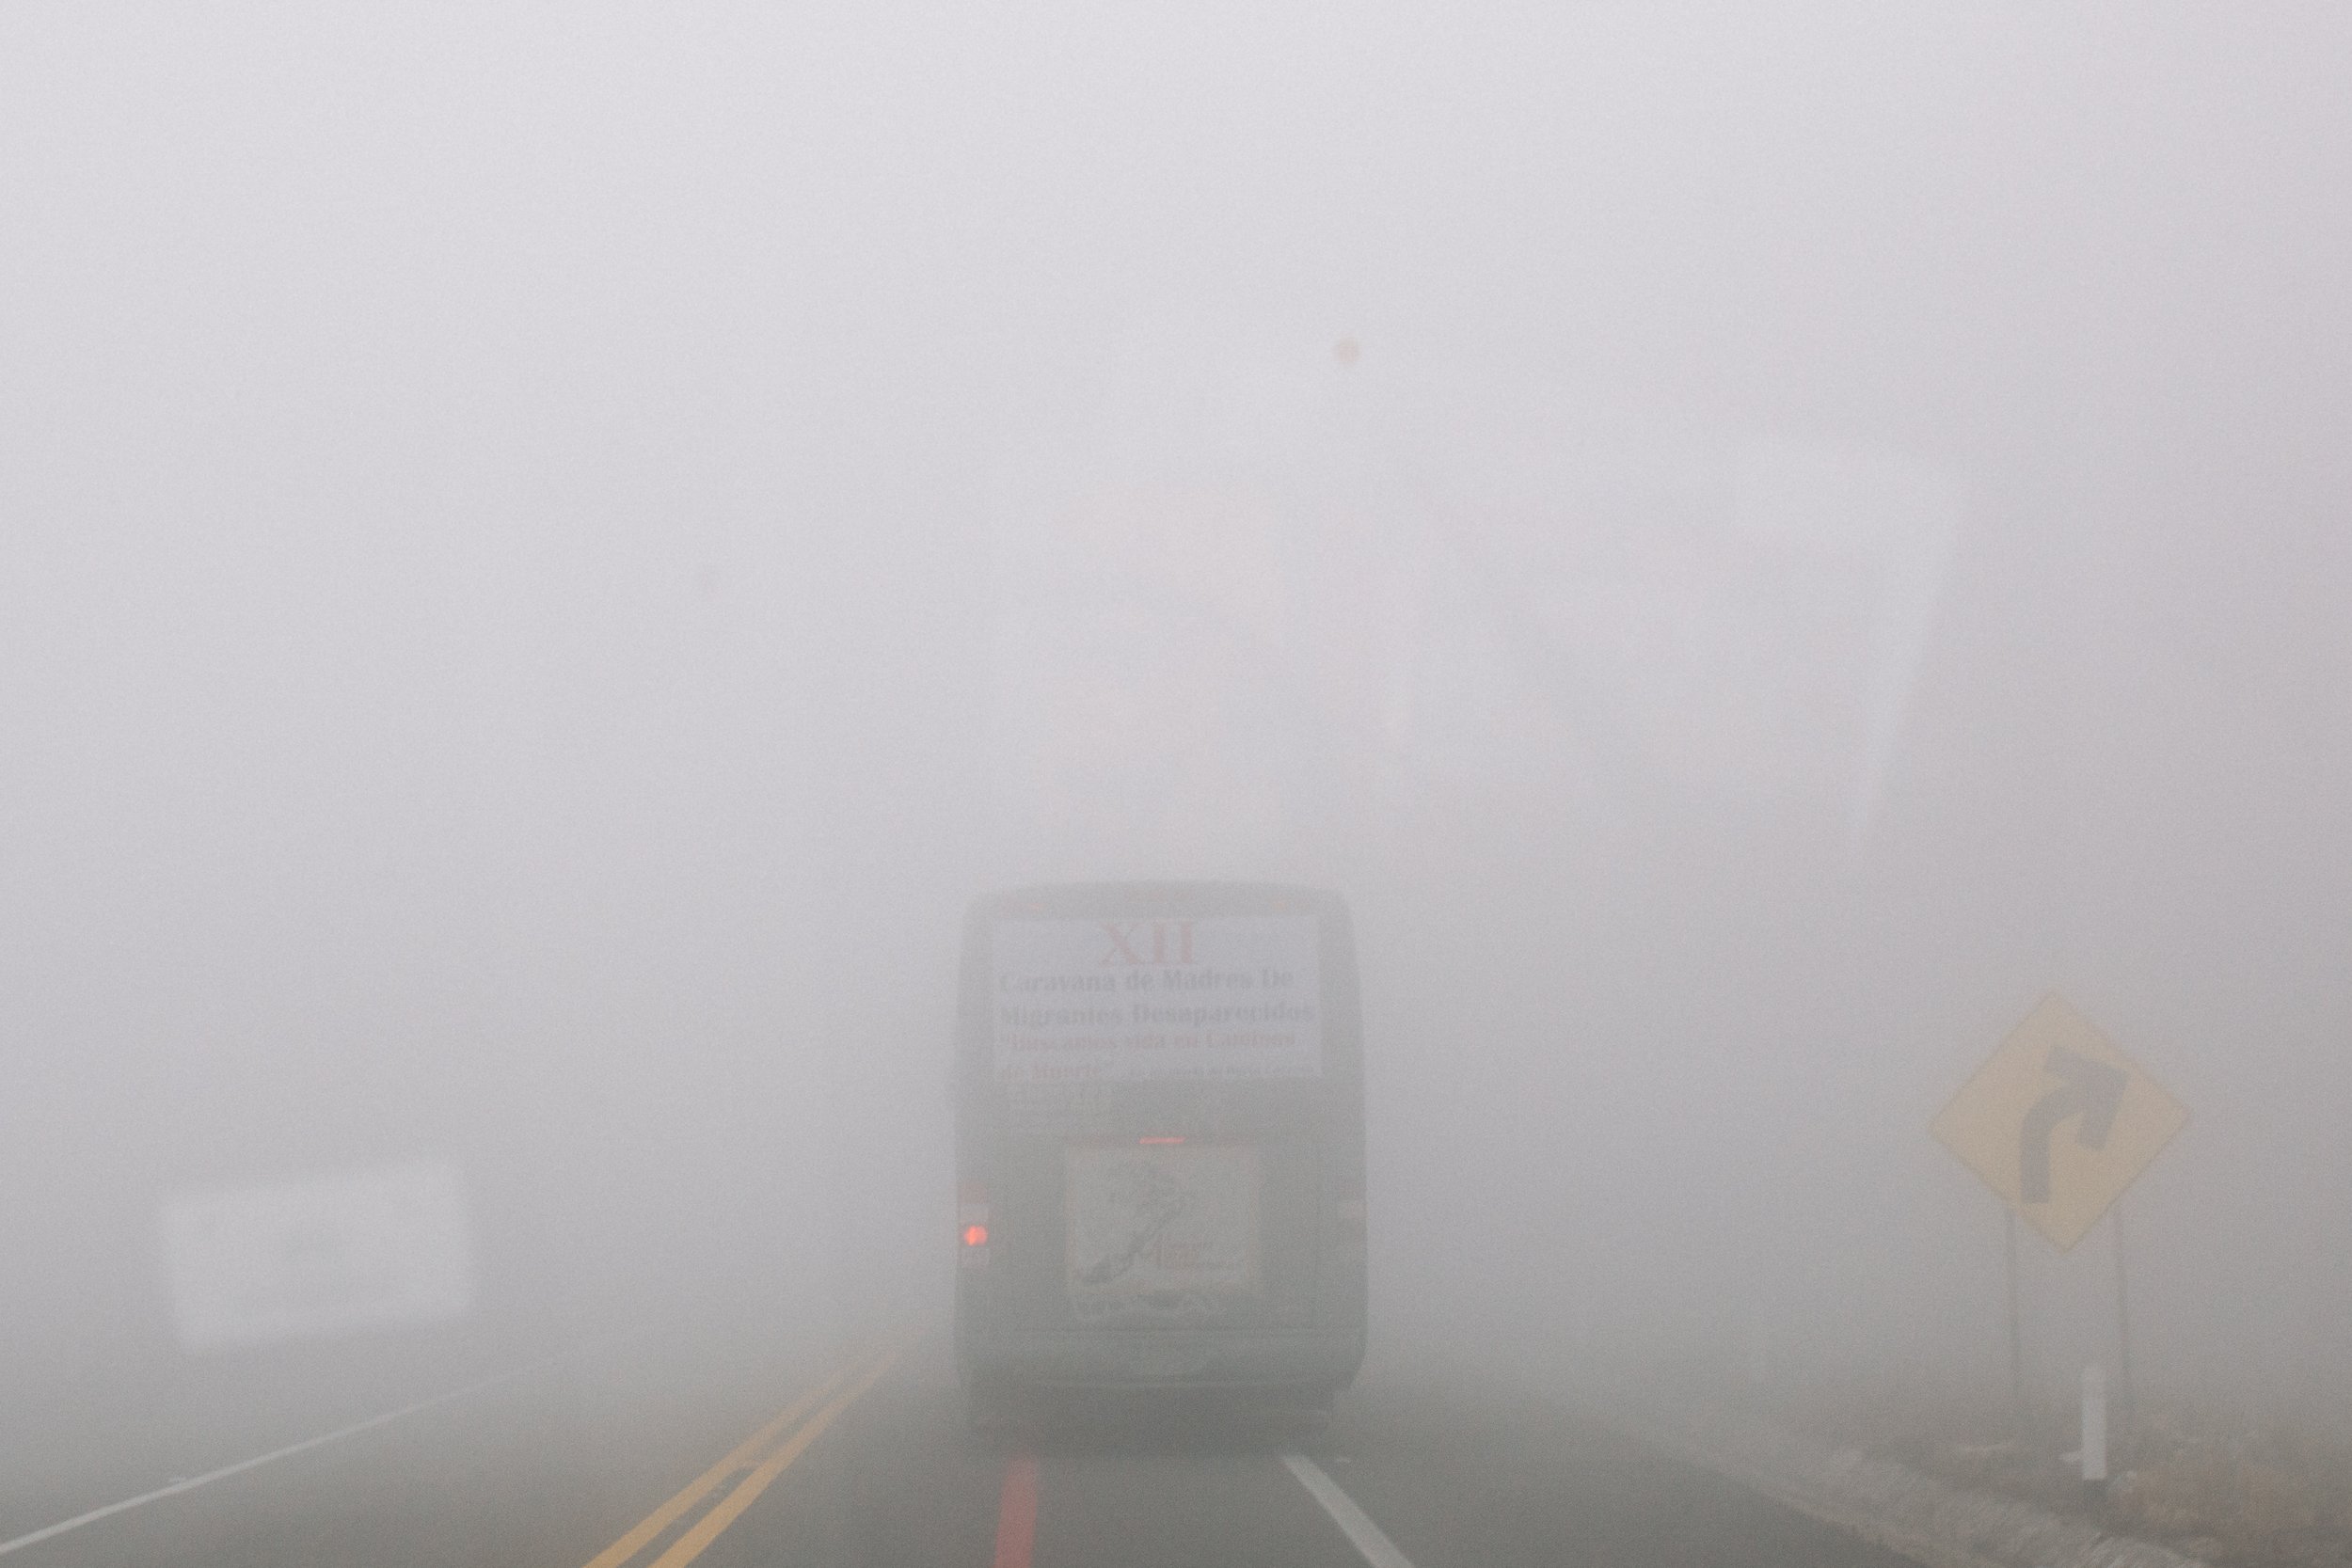  The Caravana de Madres de Migrantes Desaparecidos disappears into the thick fog as they continue their journey through Huimanguillo, Tabasco, Mexico. 